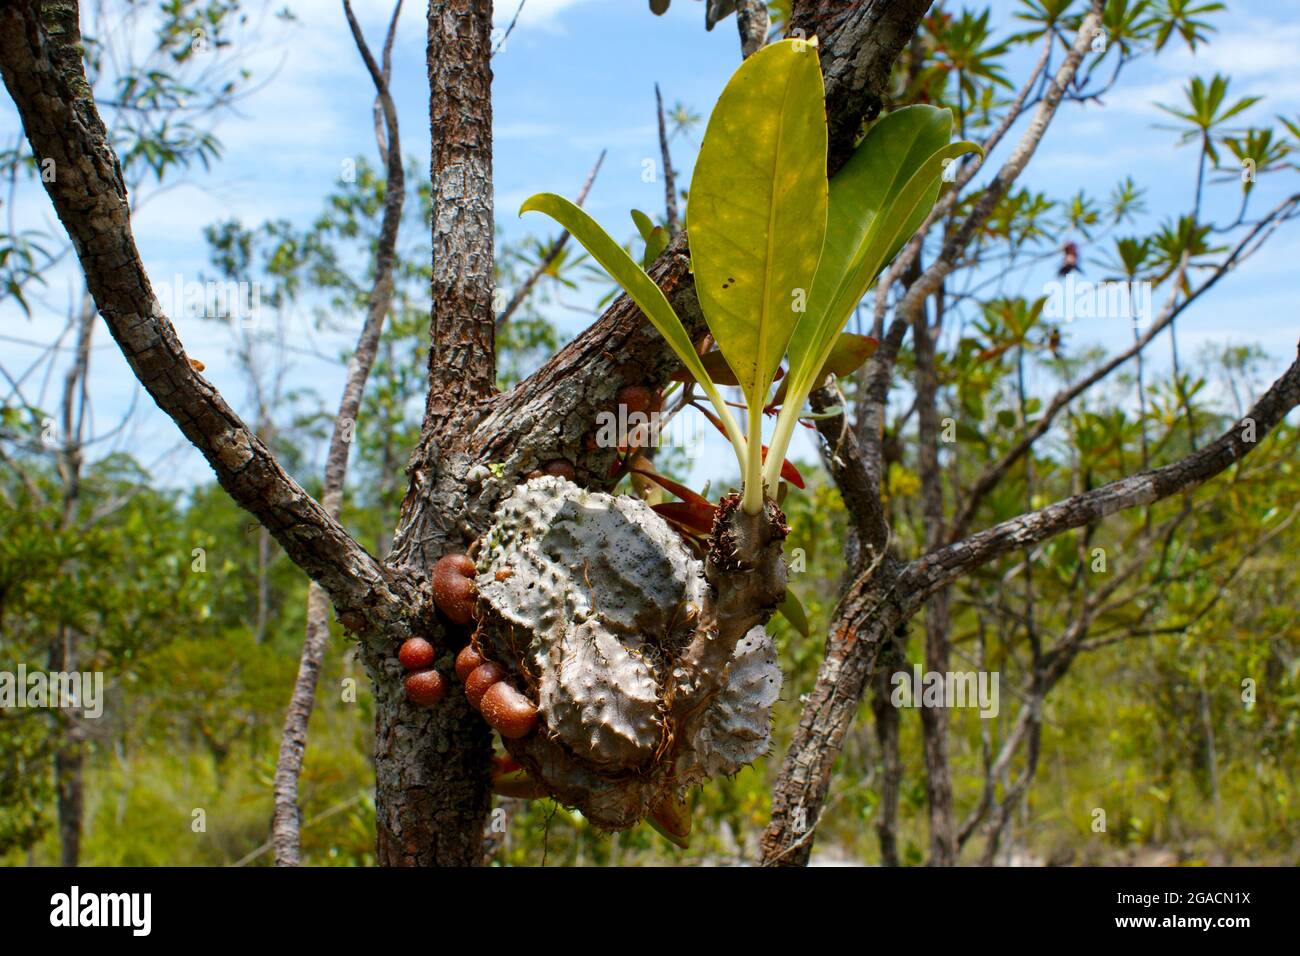 Ant plant Myrmecodia tuberosa on tree, Bako National Park, Sarawak, Borneo Stock Photo